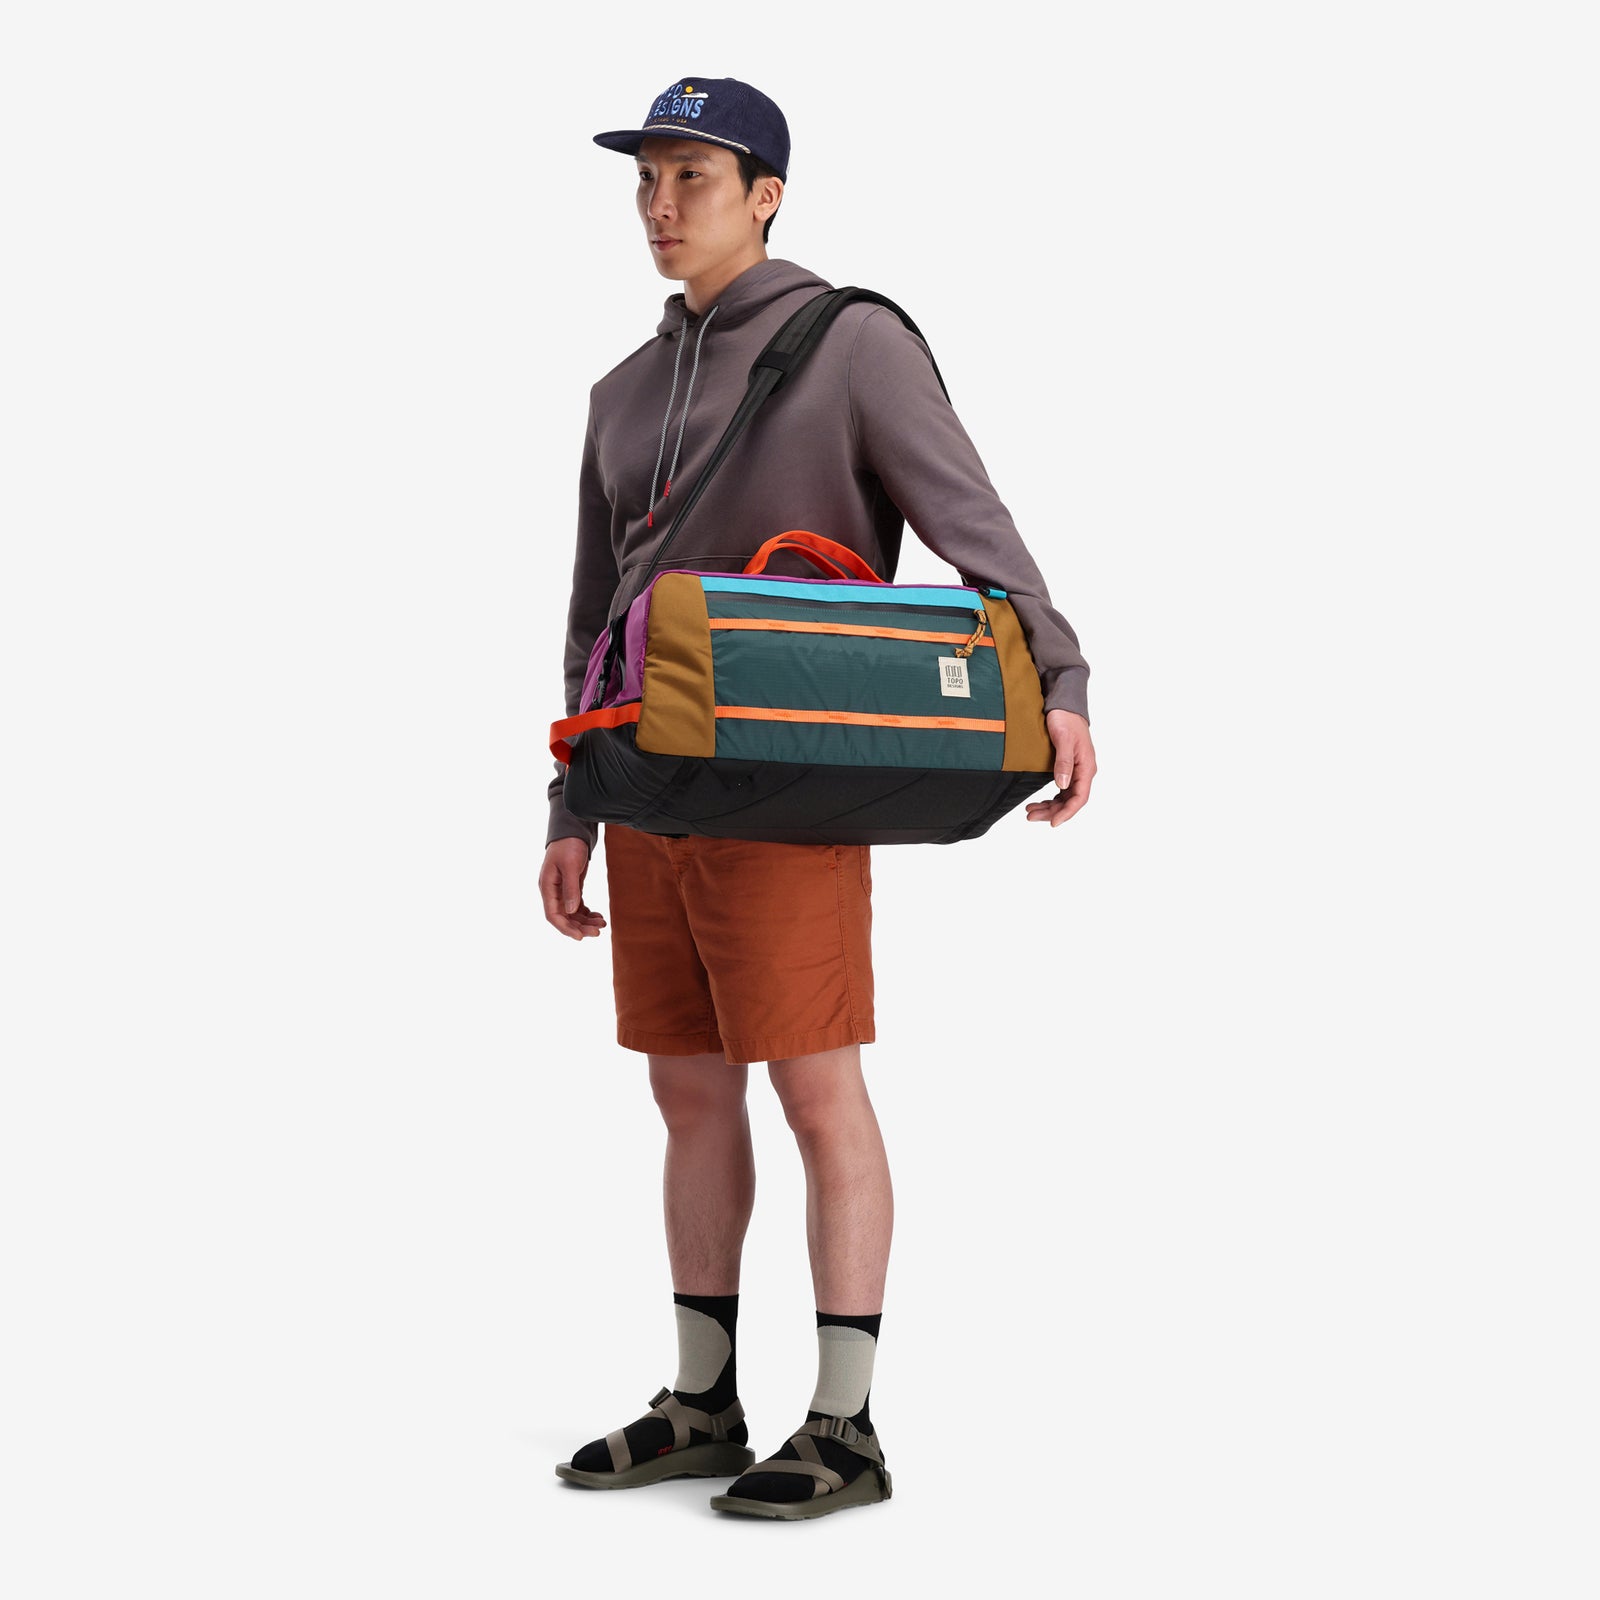 General shot of model wearing Topo Designs Mountain Duffel 40L backpack gear bag in recycled "Botanic Green / Grape" nylon.